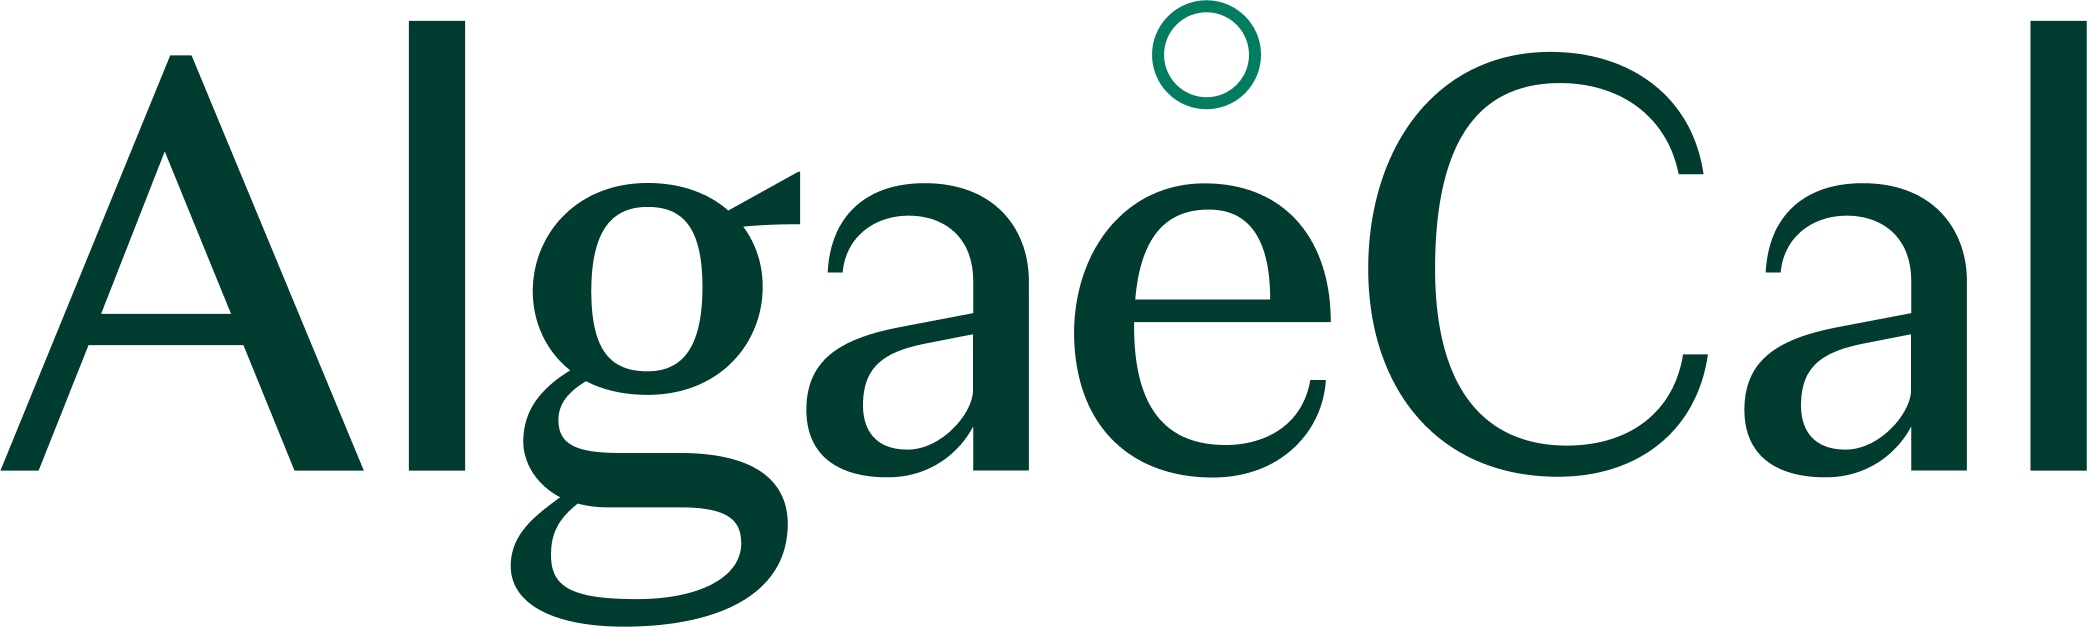 Algeacal Logo